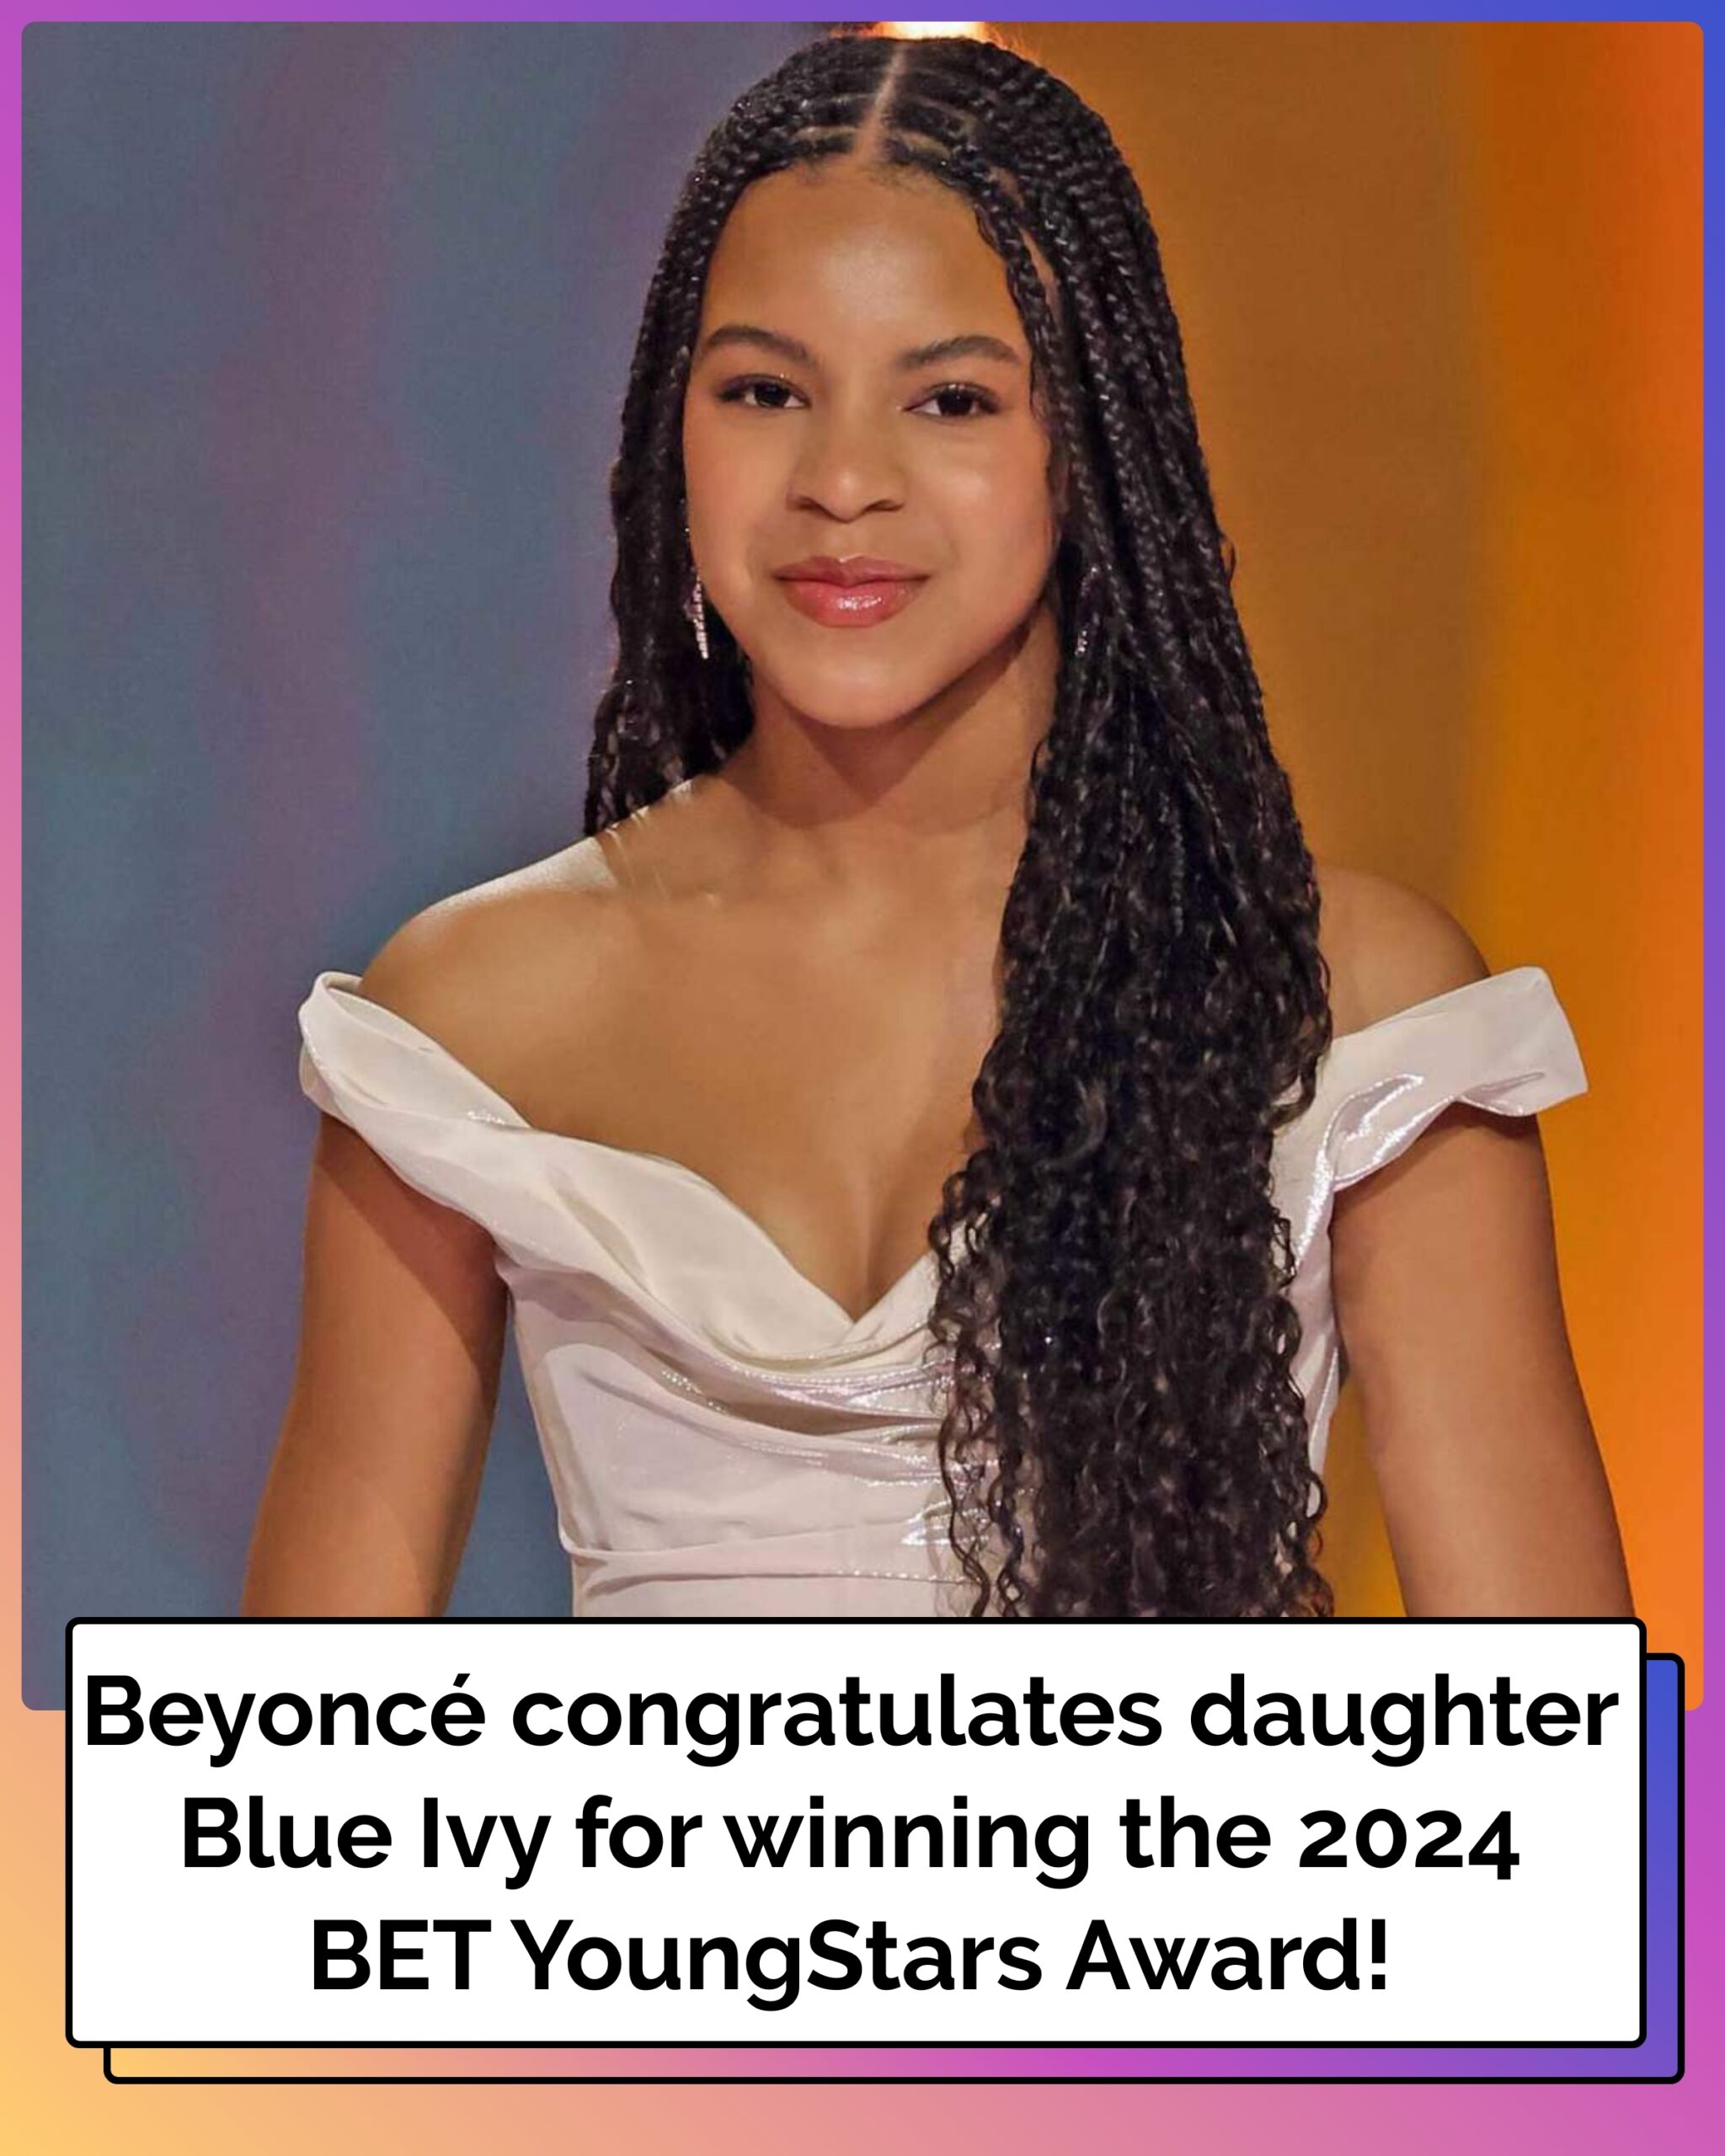 Beyoncé Congratulates Daughter Blue Ivy for Winning BET YoungStars Award